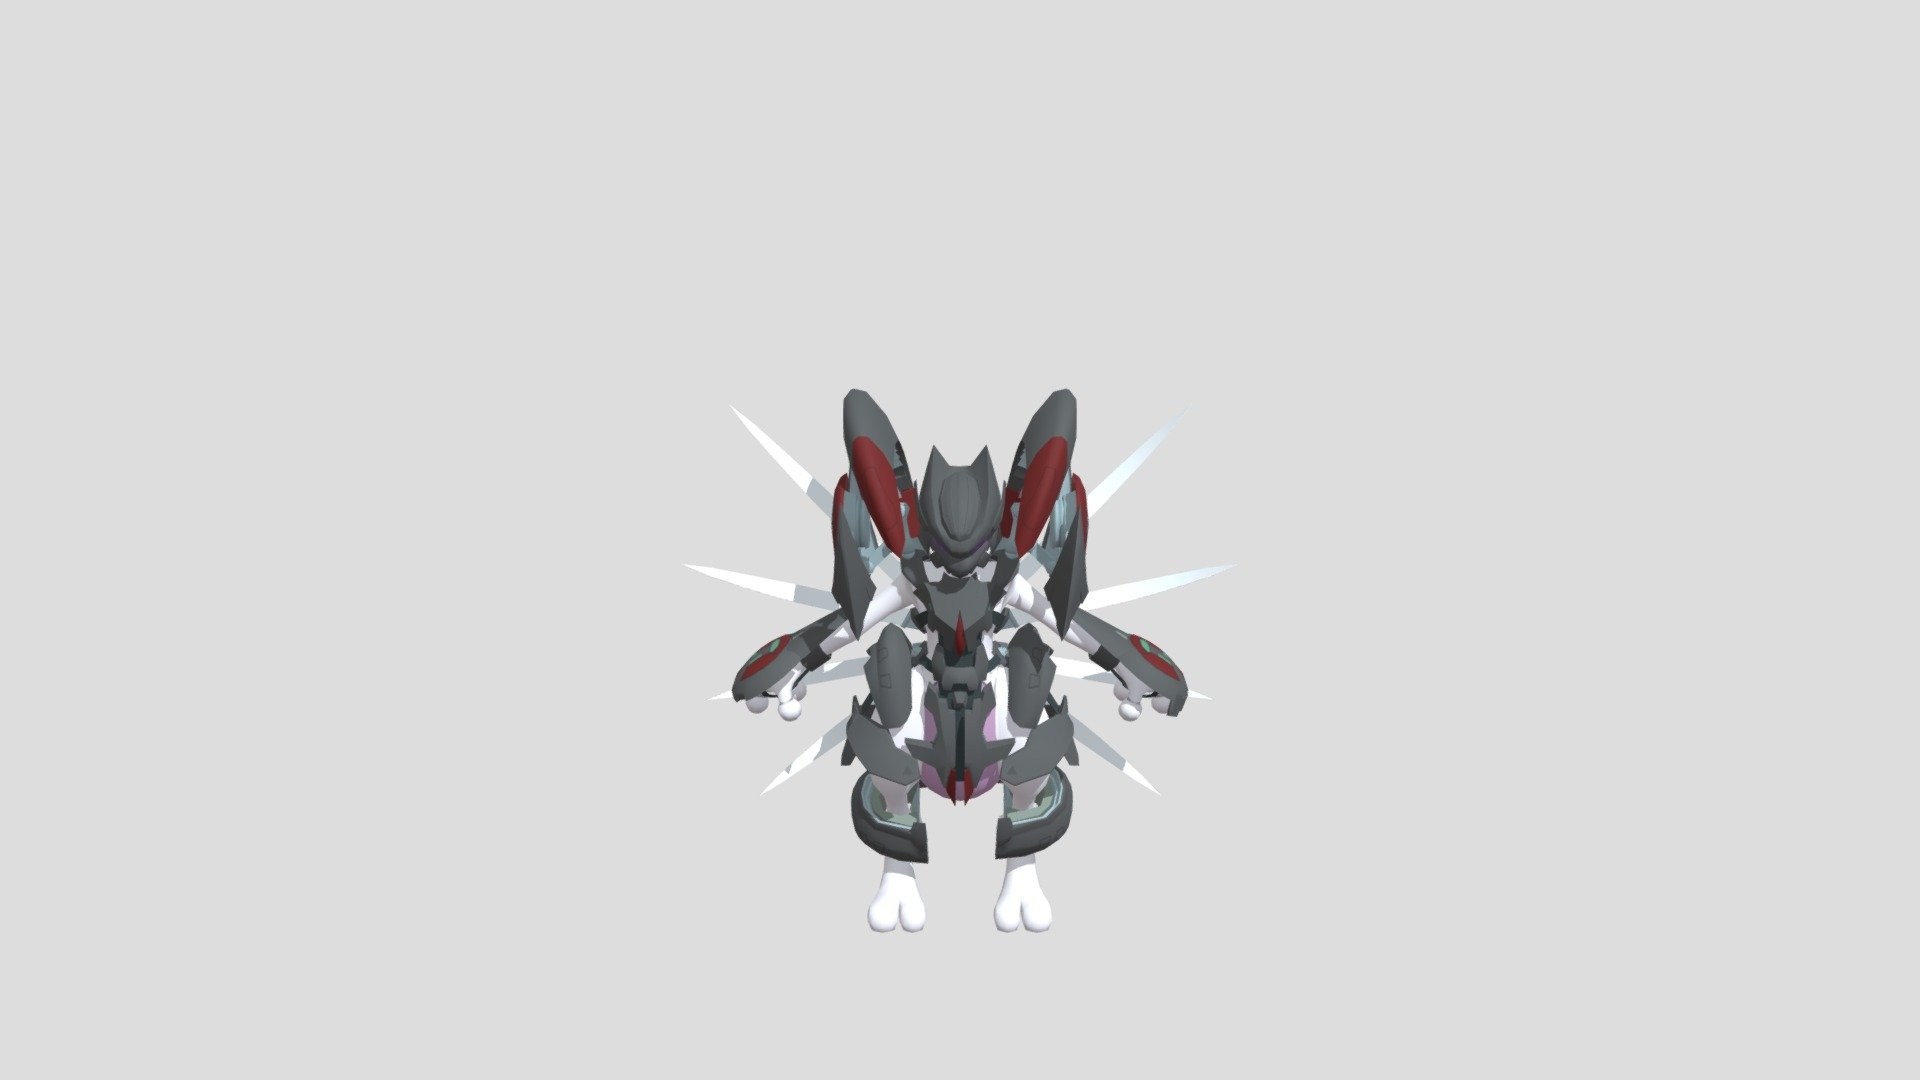 Armored Mewtwo – Get This Pokemon